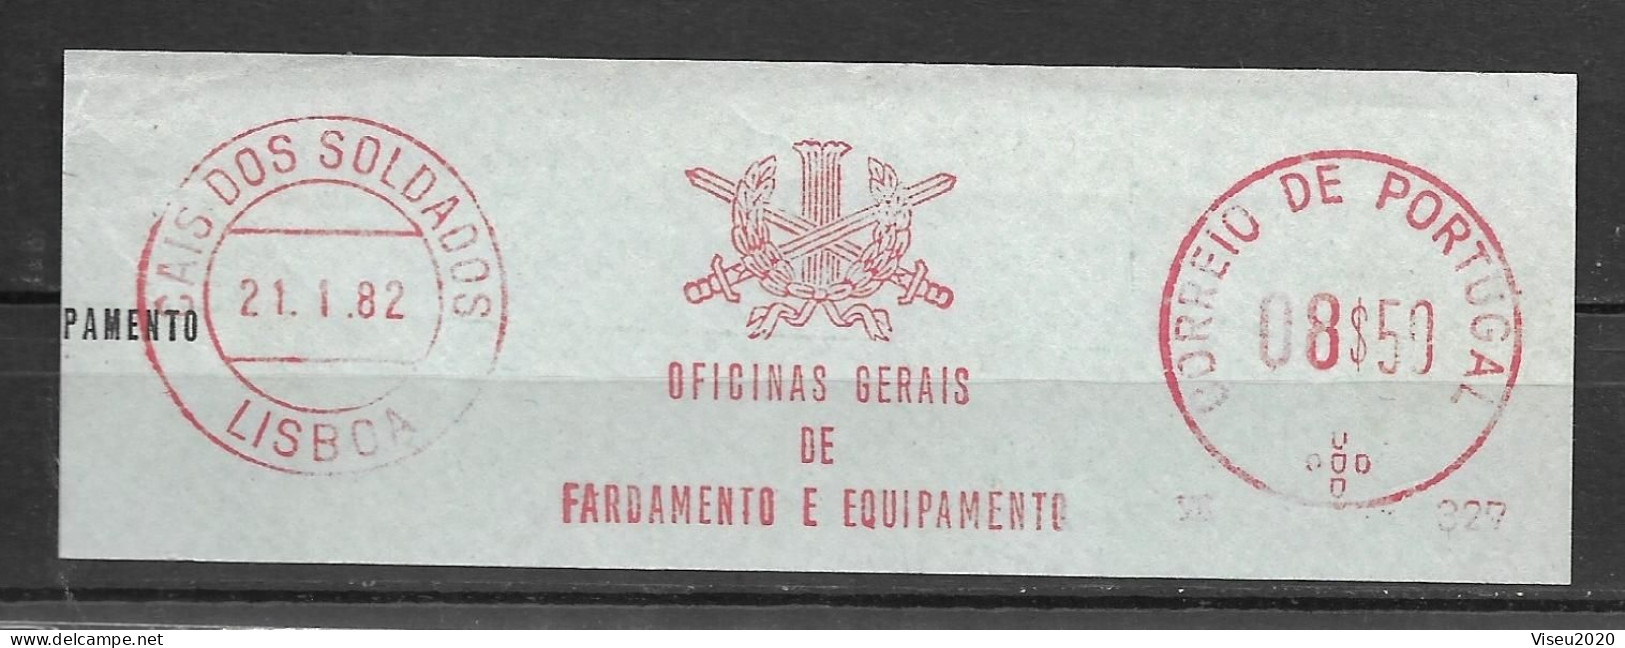 Portugal, 1982 - Oficinas Gerais De Fardamento E Equipamento - FDC